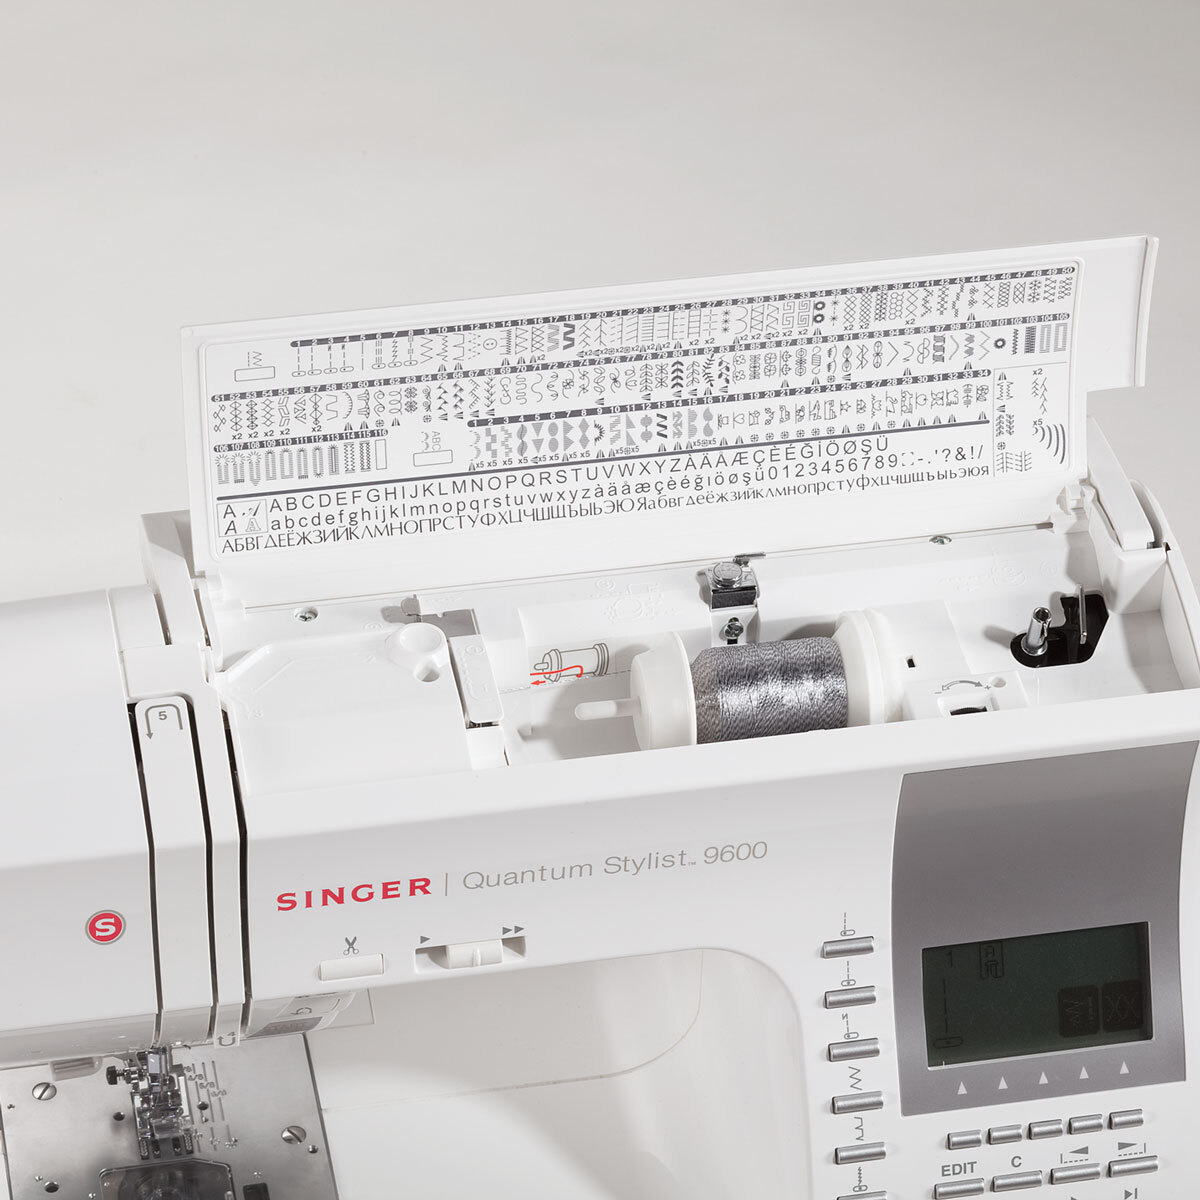 Singer 9960 Quantum Stylist Computerised Sewing Machine